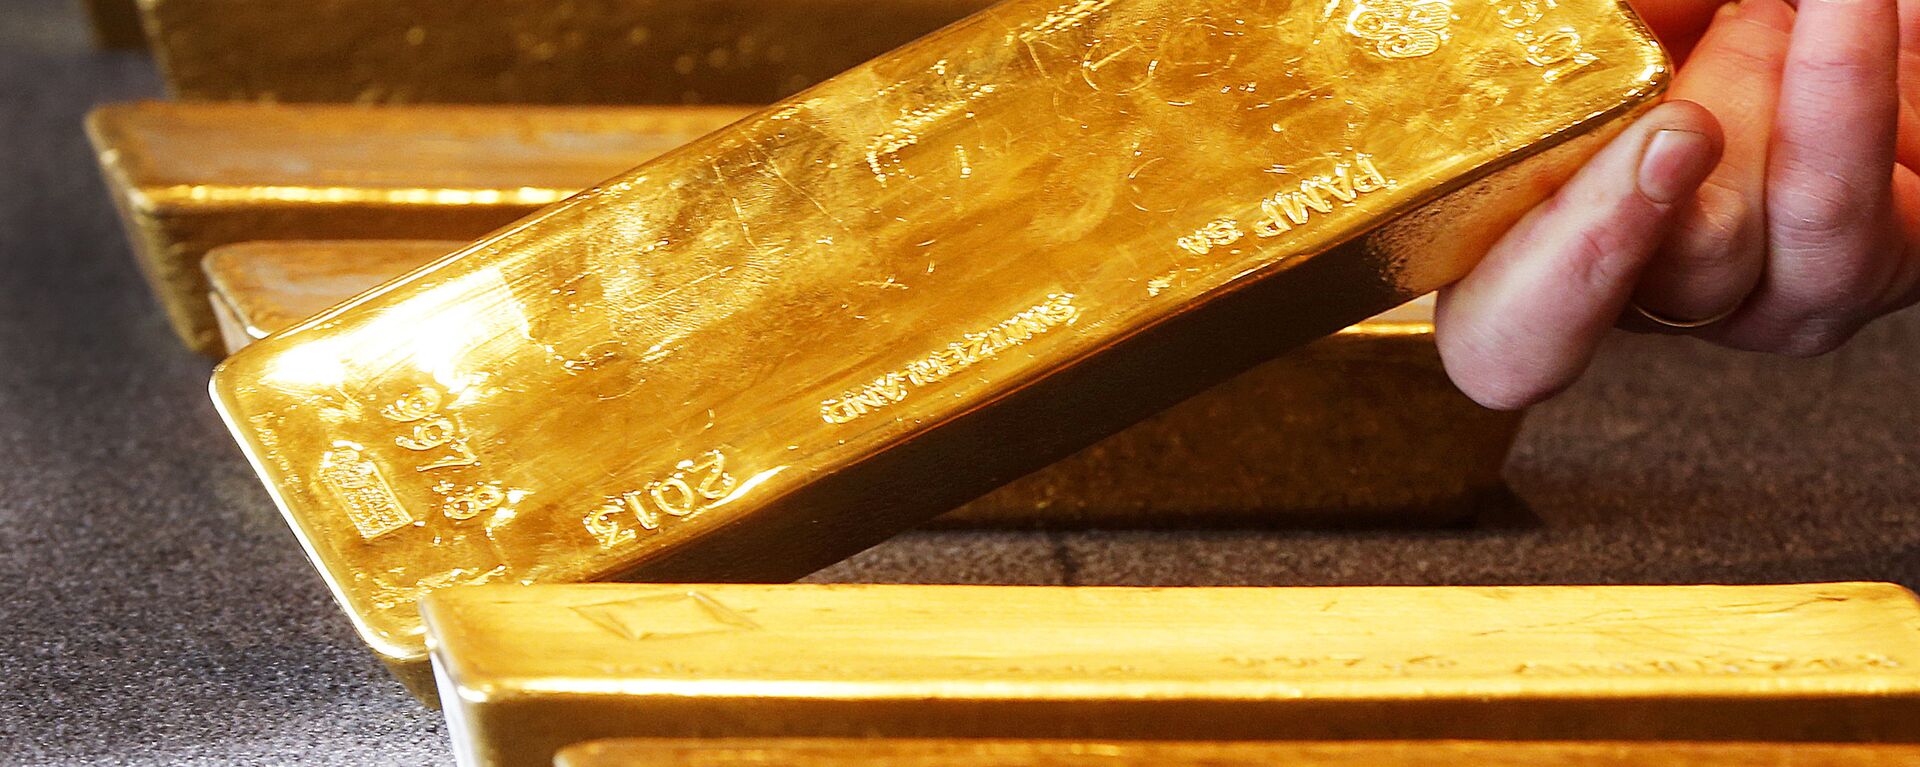 Various gold bars are on display at the Bundesbank headquarter in Frankfurt, Germany (File) - Sputnik International, 1920, 02.09.2018